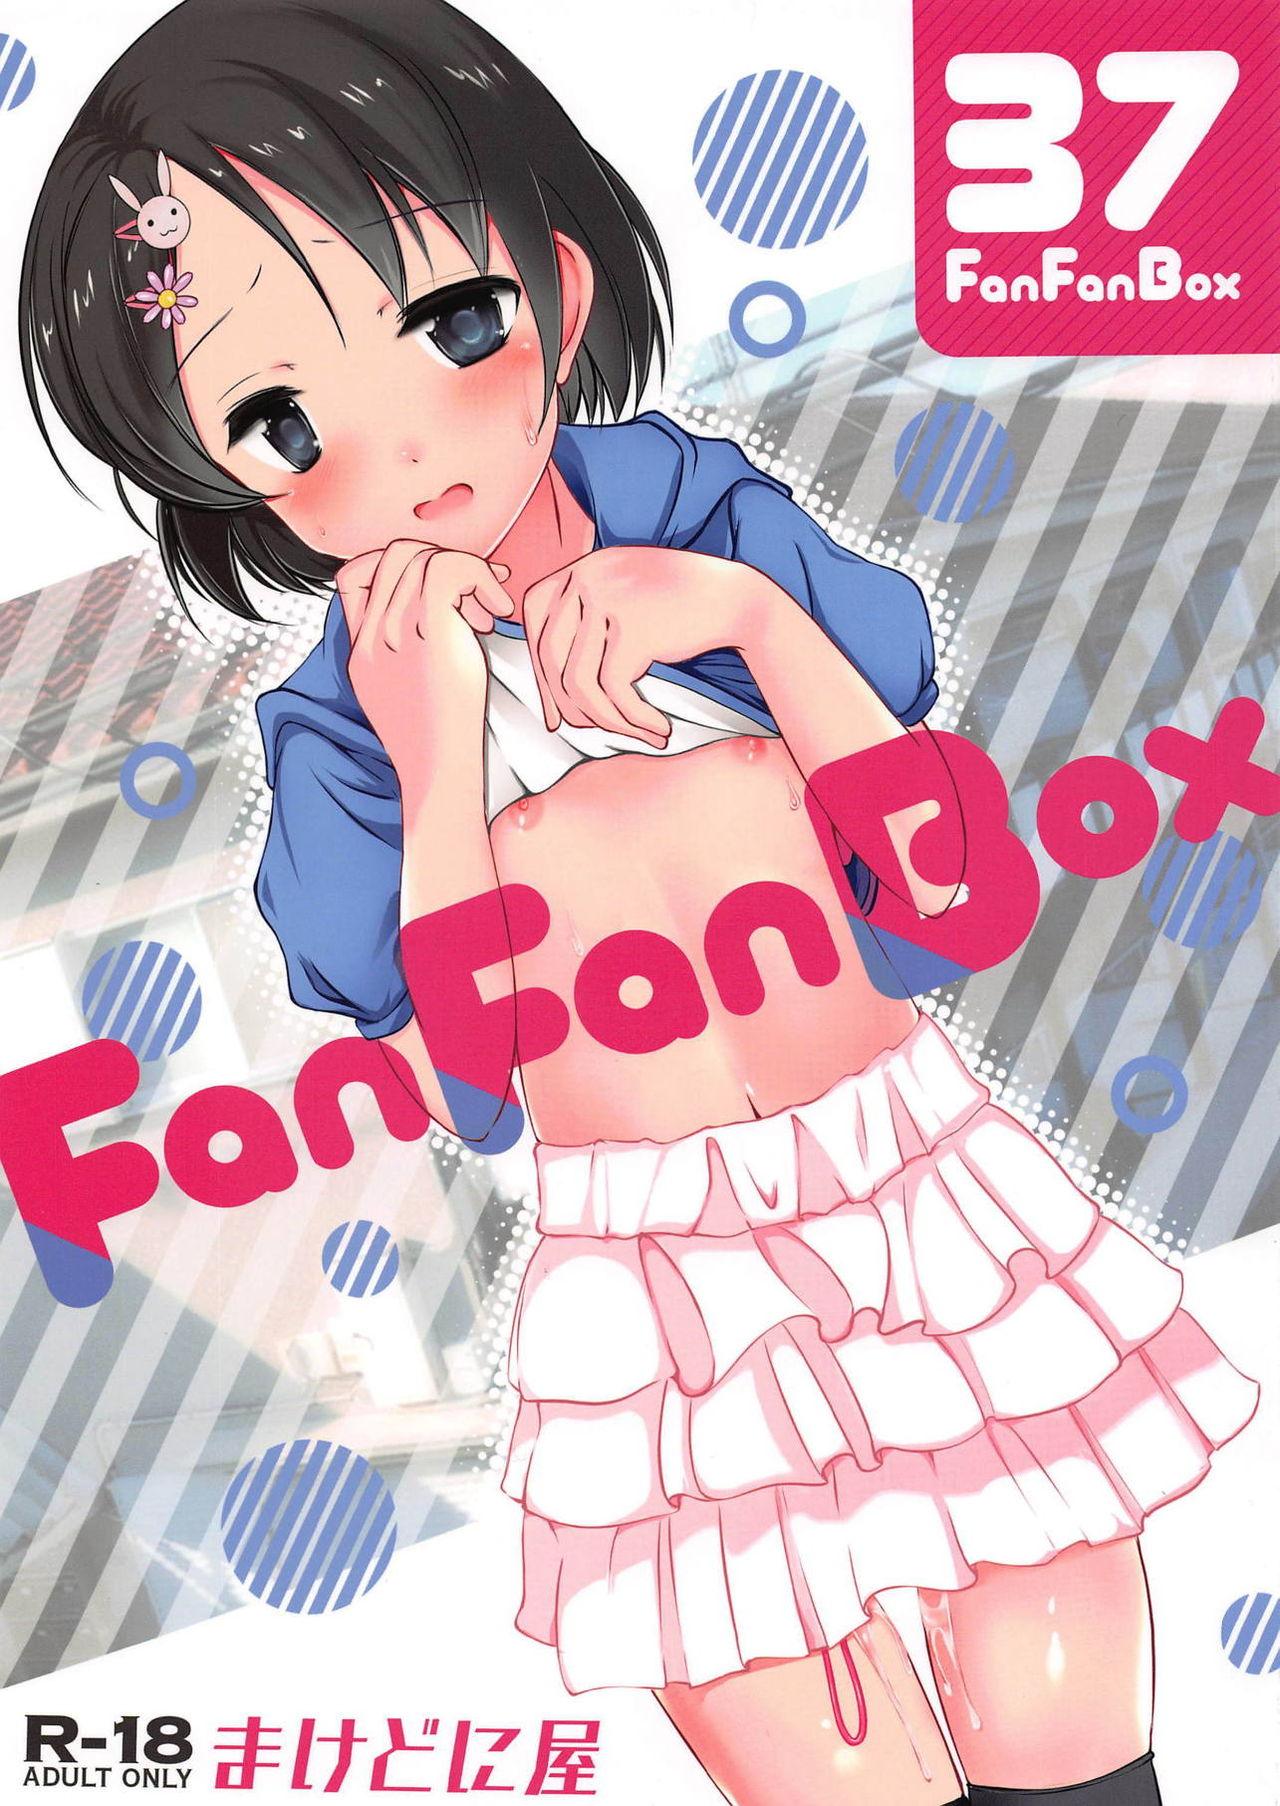 FanFanBox37 0